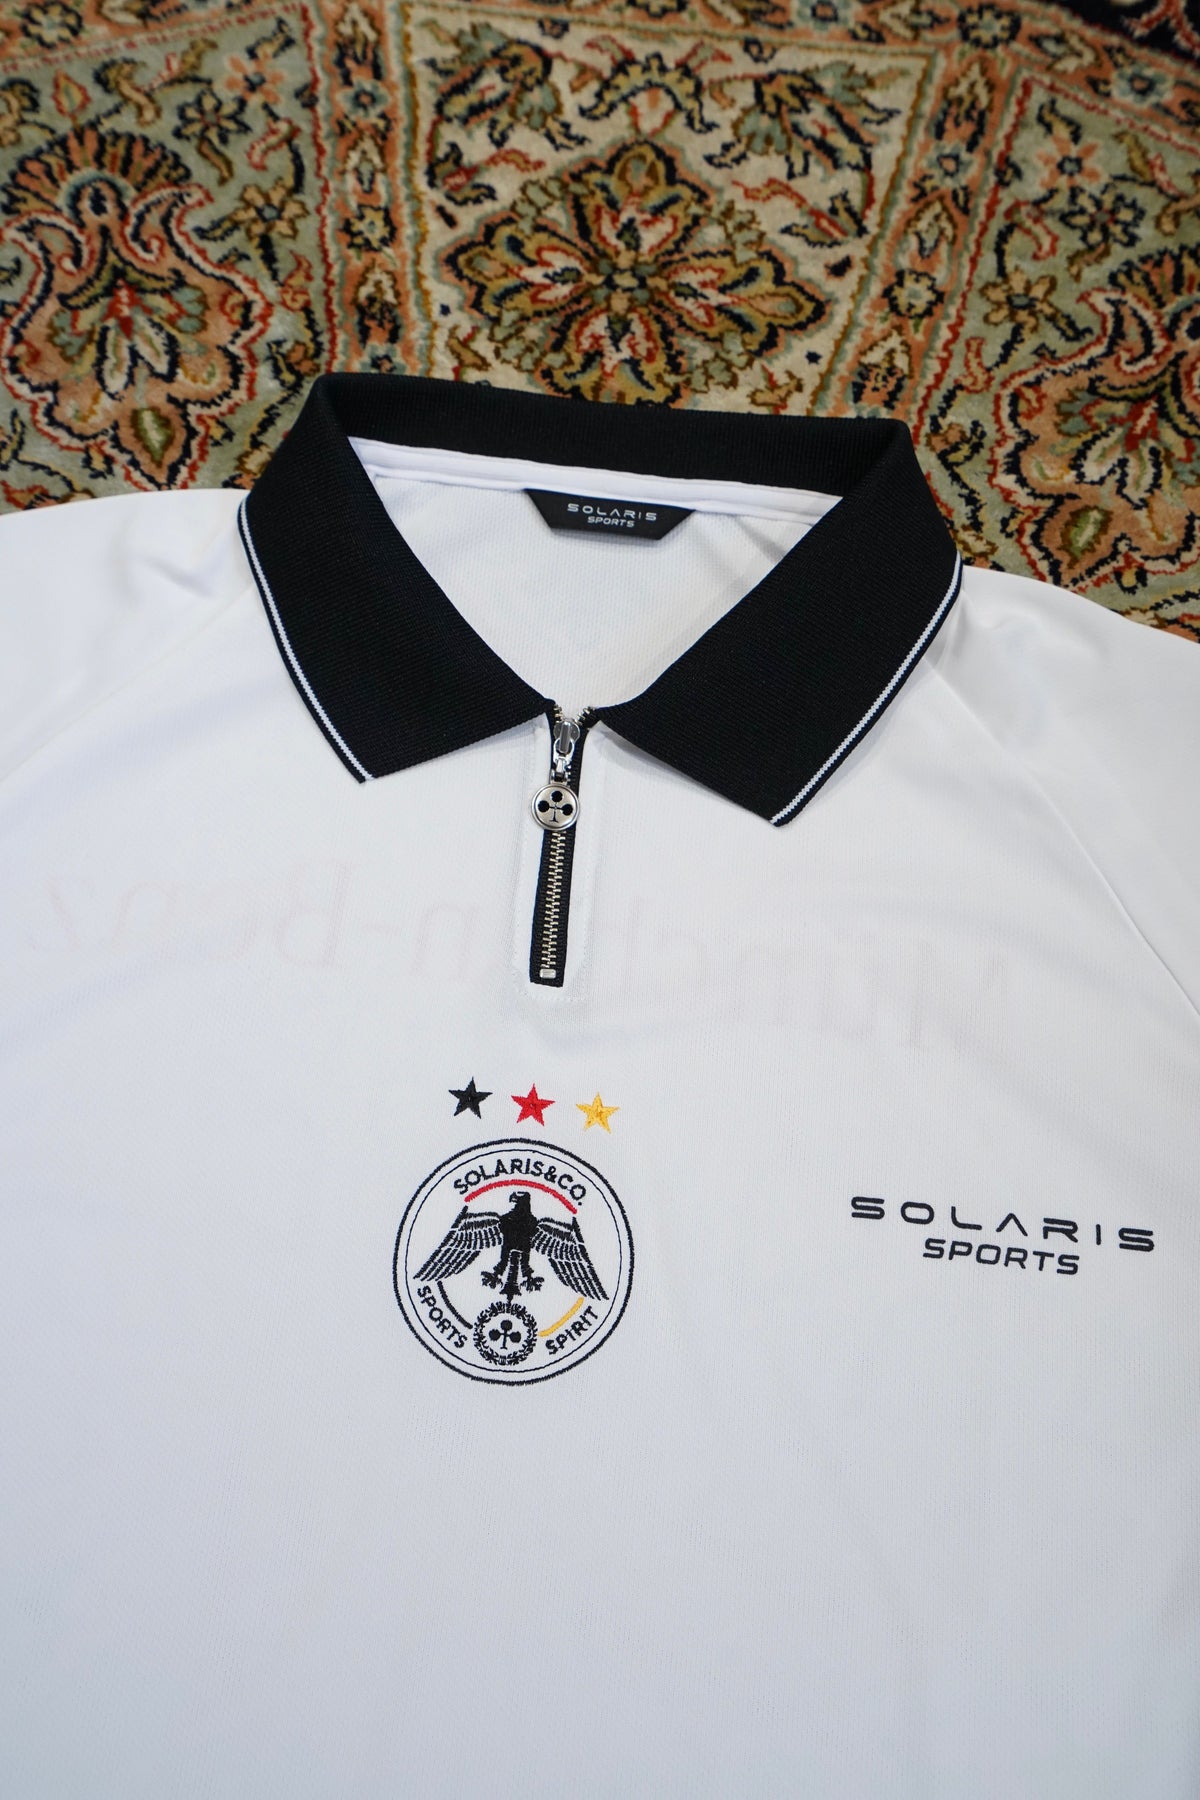 SOLARIS SPORTS L/S FOOTBALL SHIRT WHITE - Tシャツ/カットソー(七分